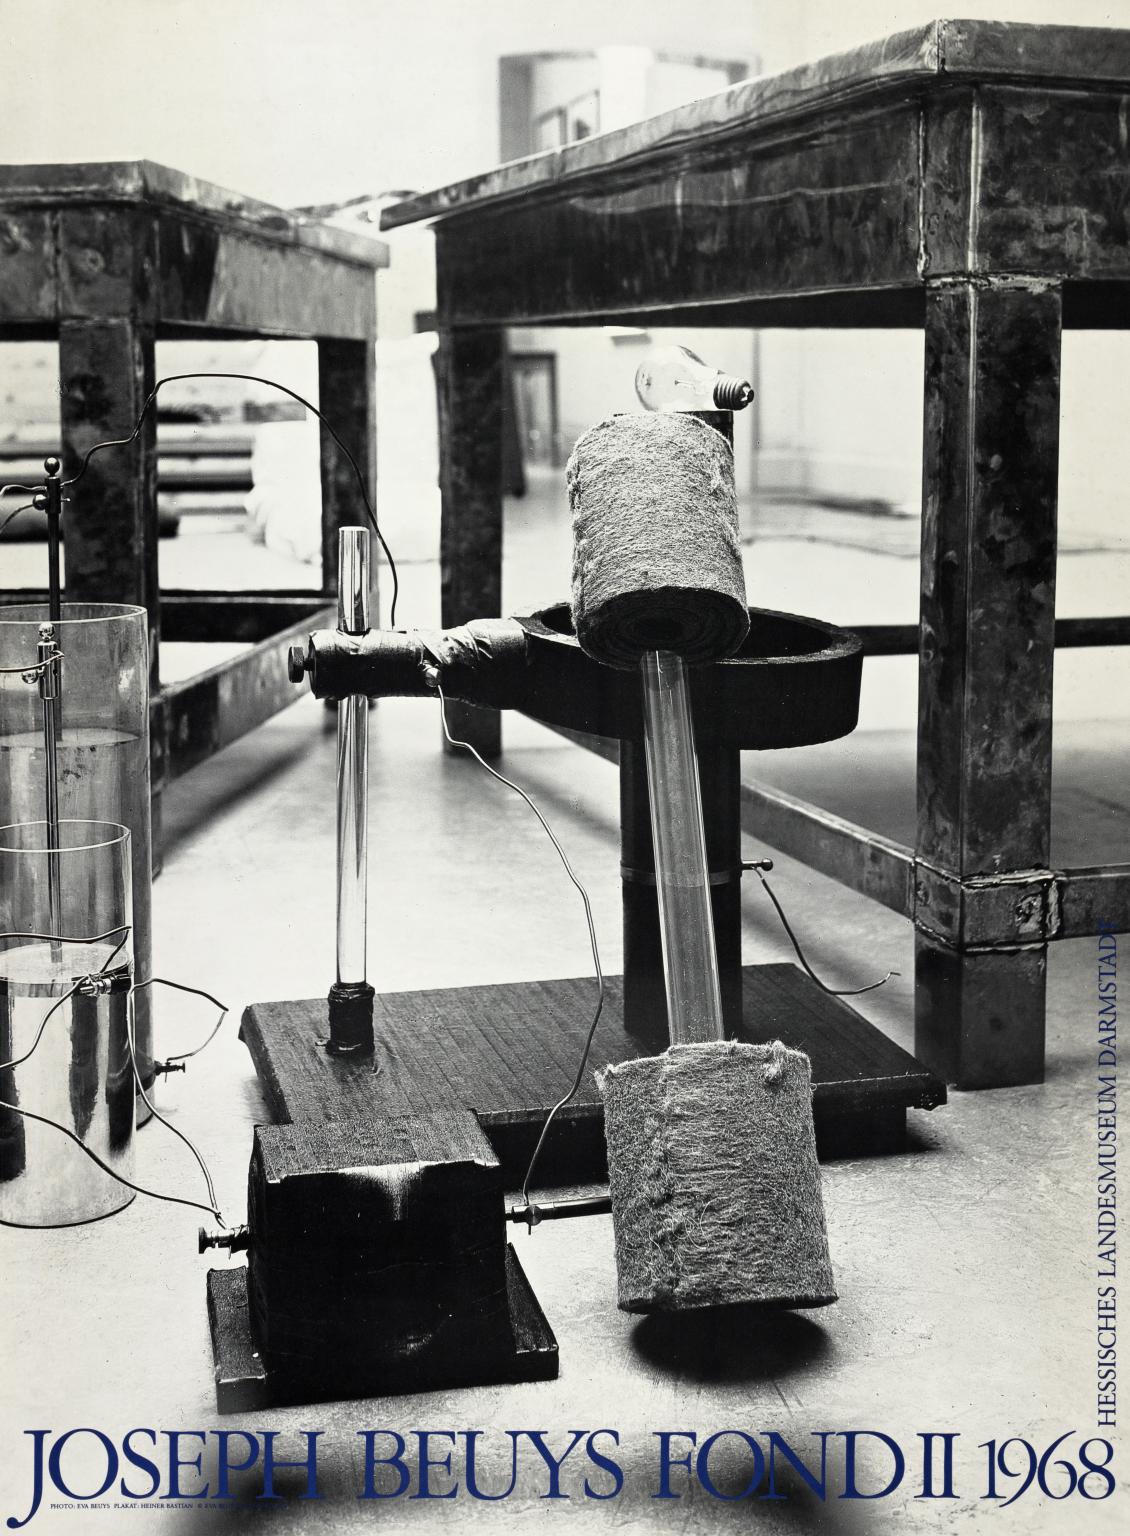 Joseph Beuys: FOND II, 1968. 1984